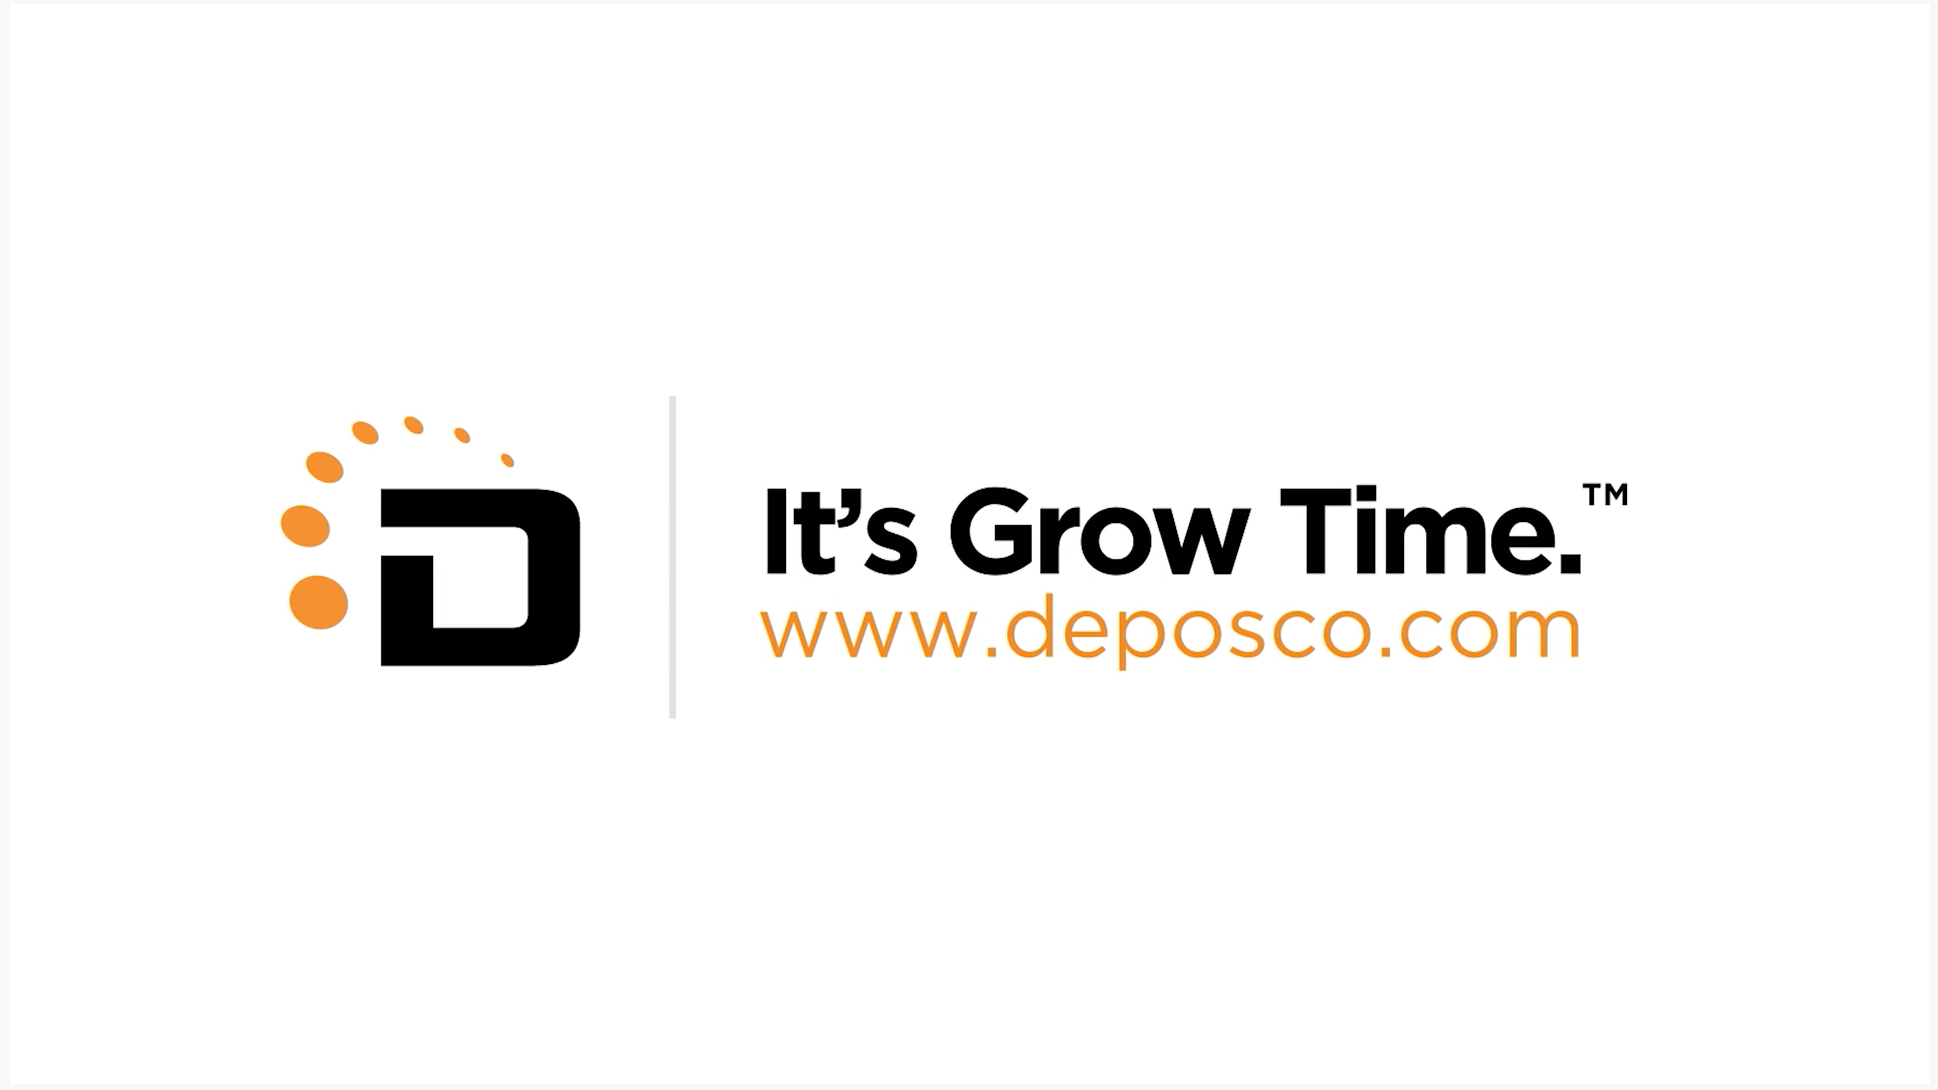 Deposco: It's Grow Time